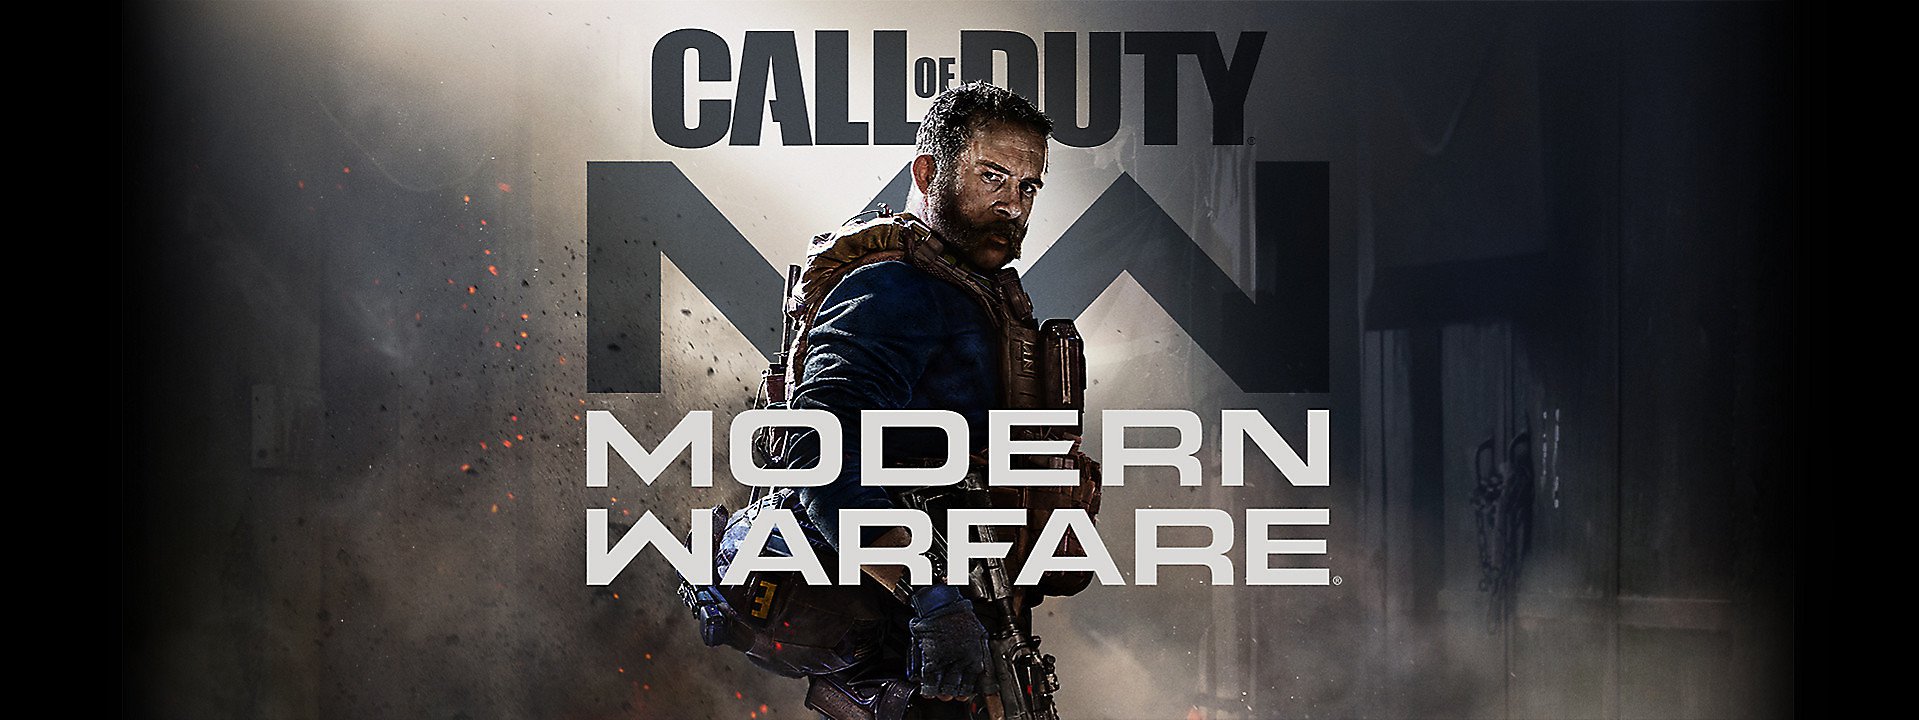 Call of Duty Modern Warfare Operator Enhanced Edition 5